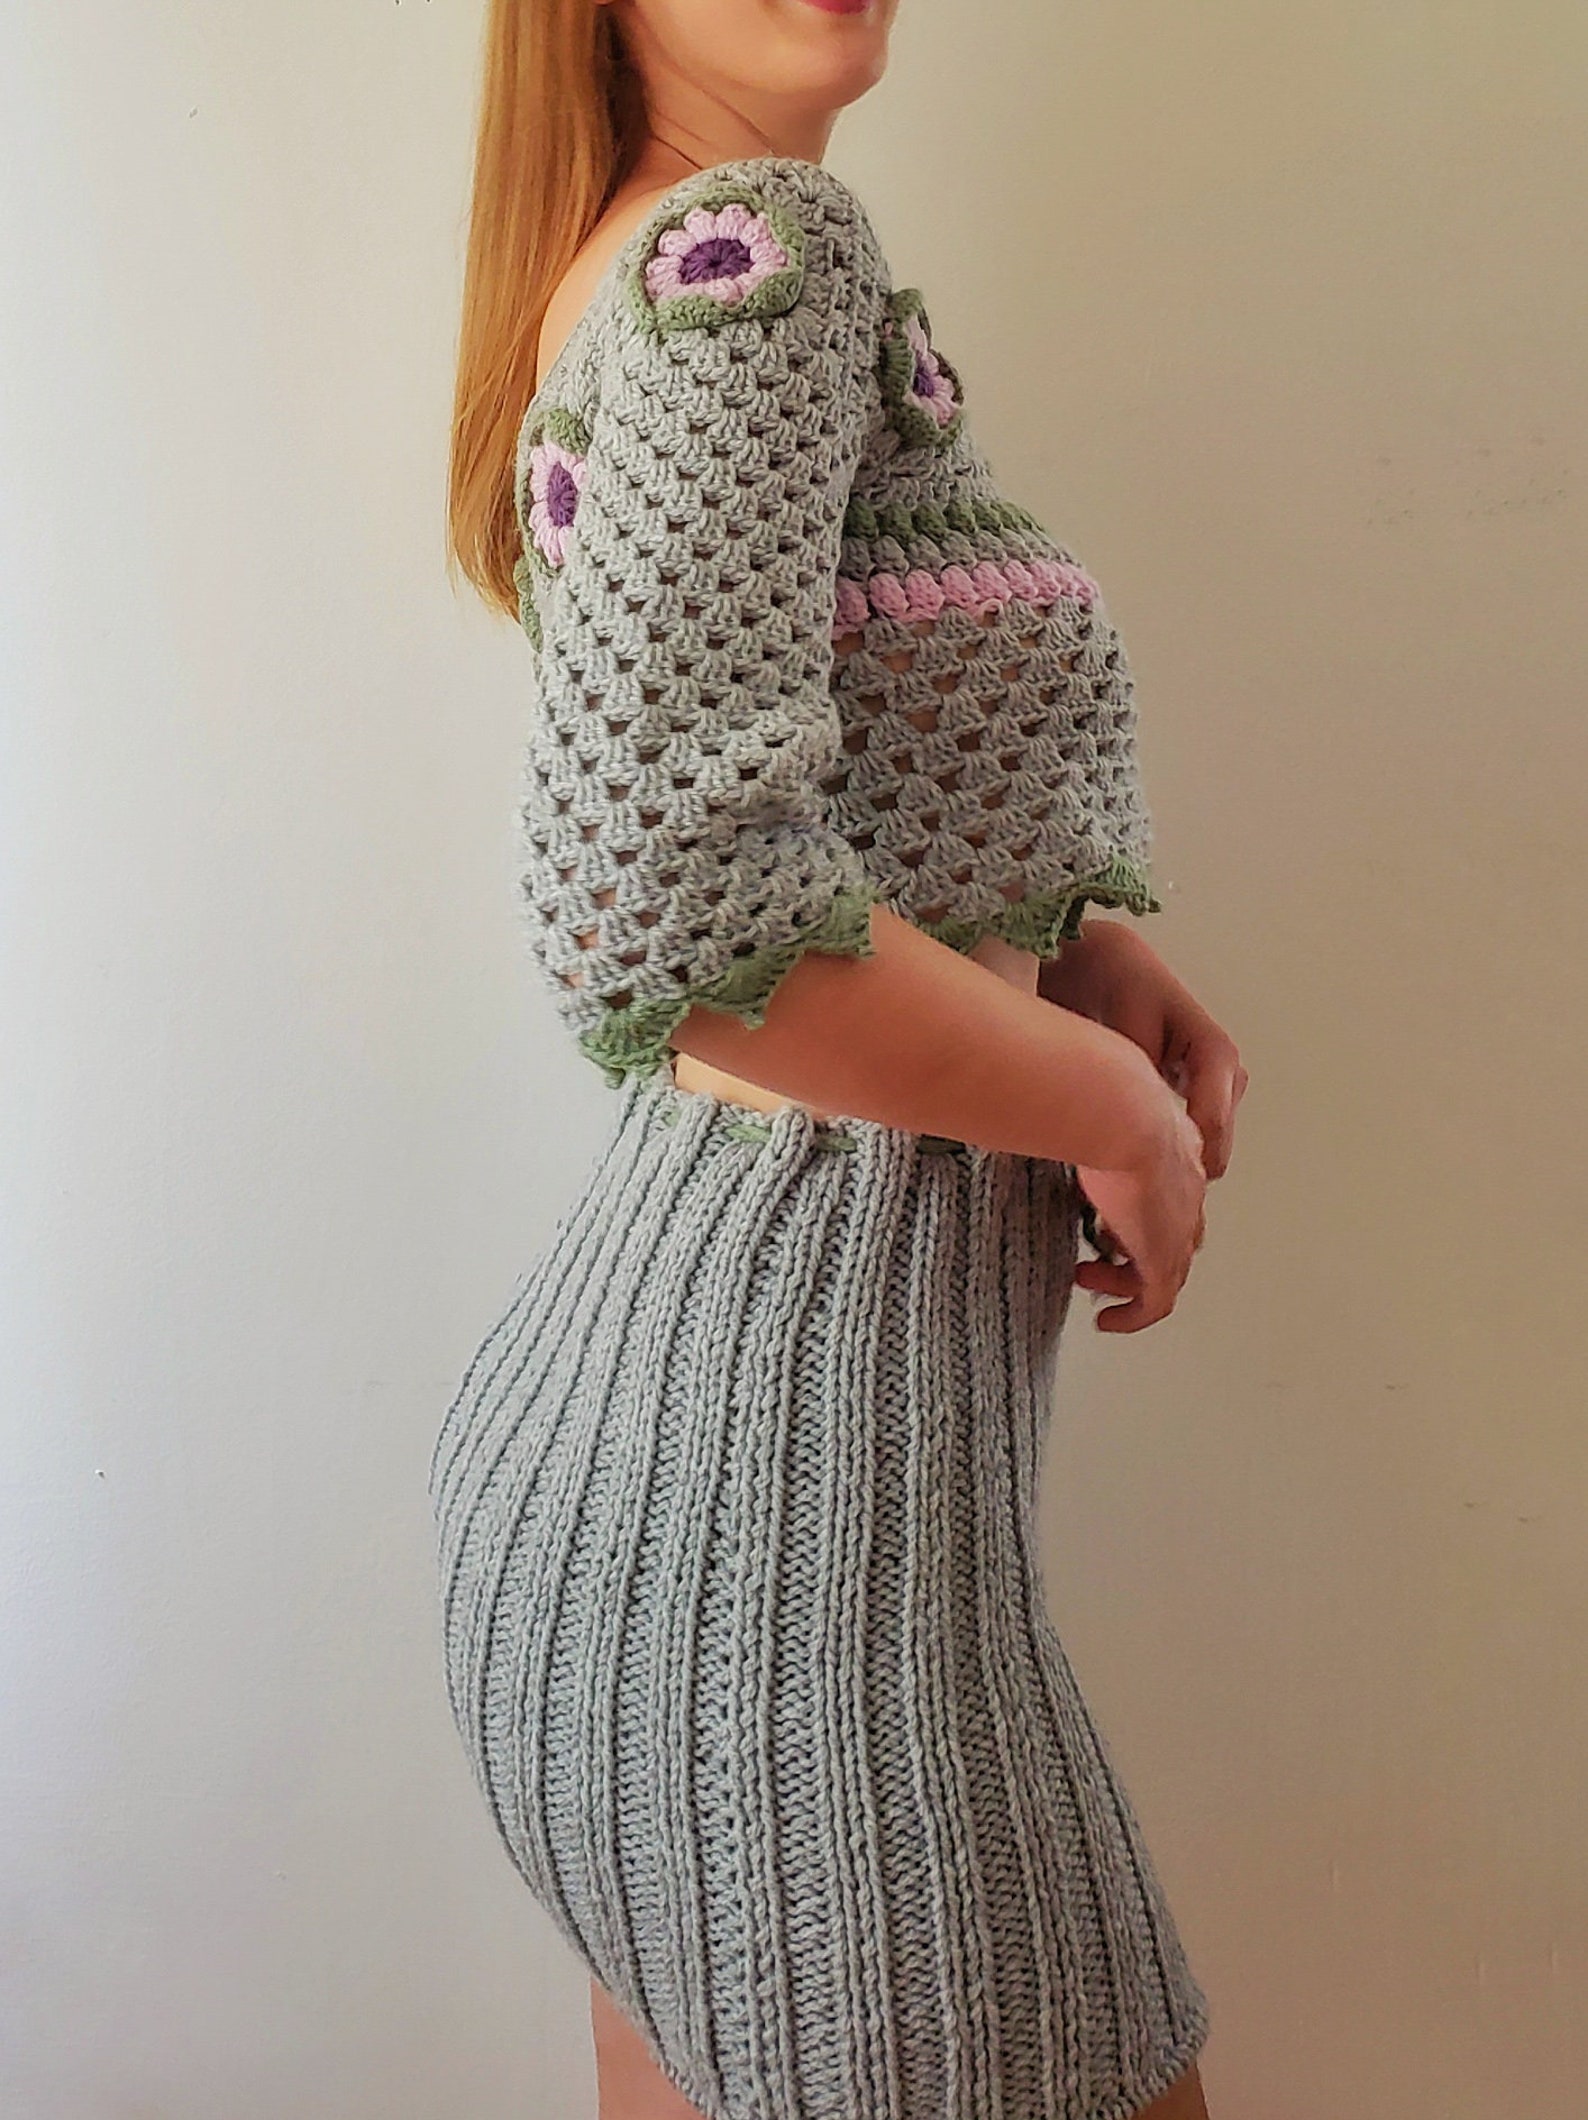 Amazing handmade colorful crochet set Crochet Set Crochet | Etsy